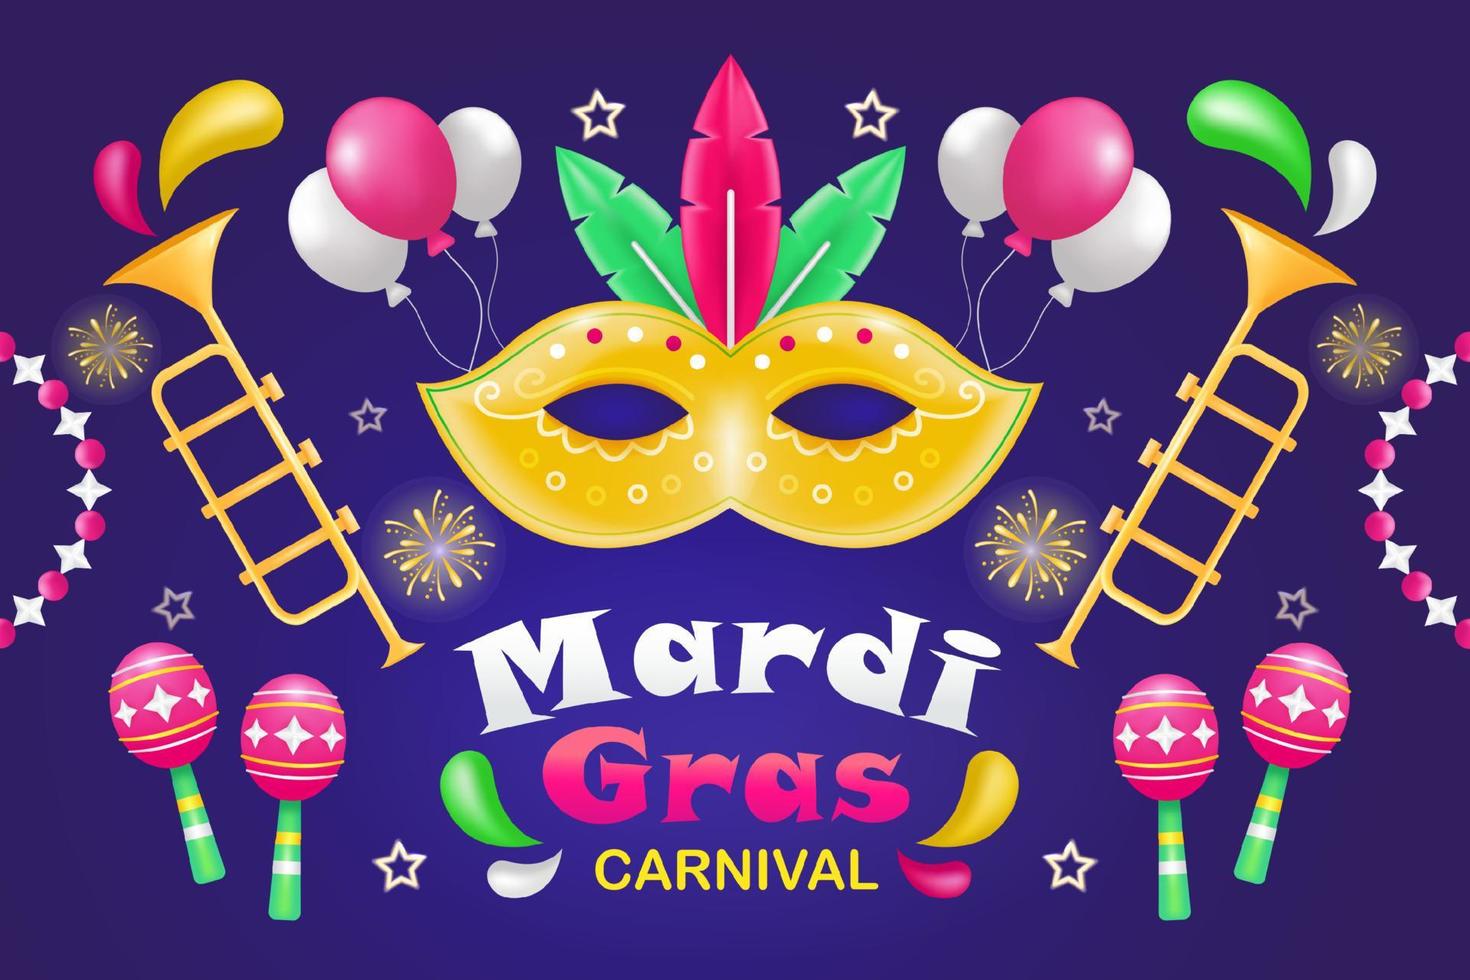 Mardi Gras Carnival. illustration of 3d masks, maracas, trumpets and fireworks ornaments vector